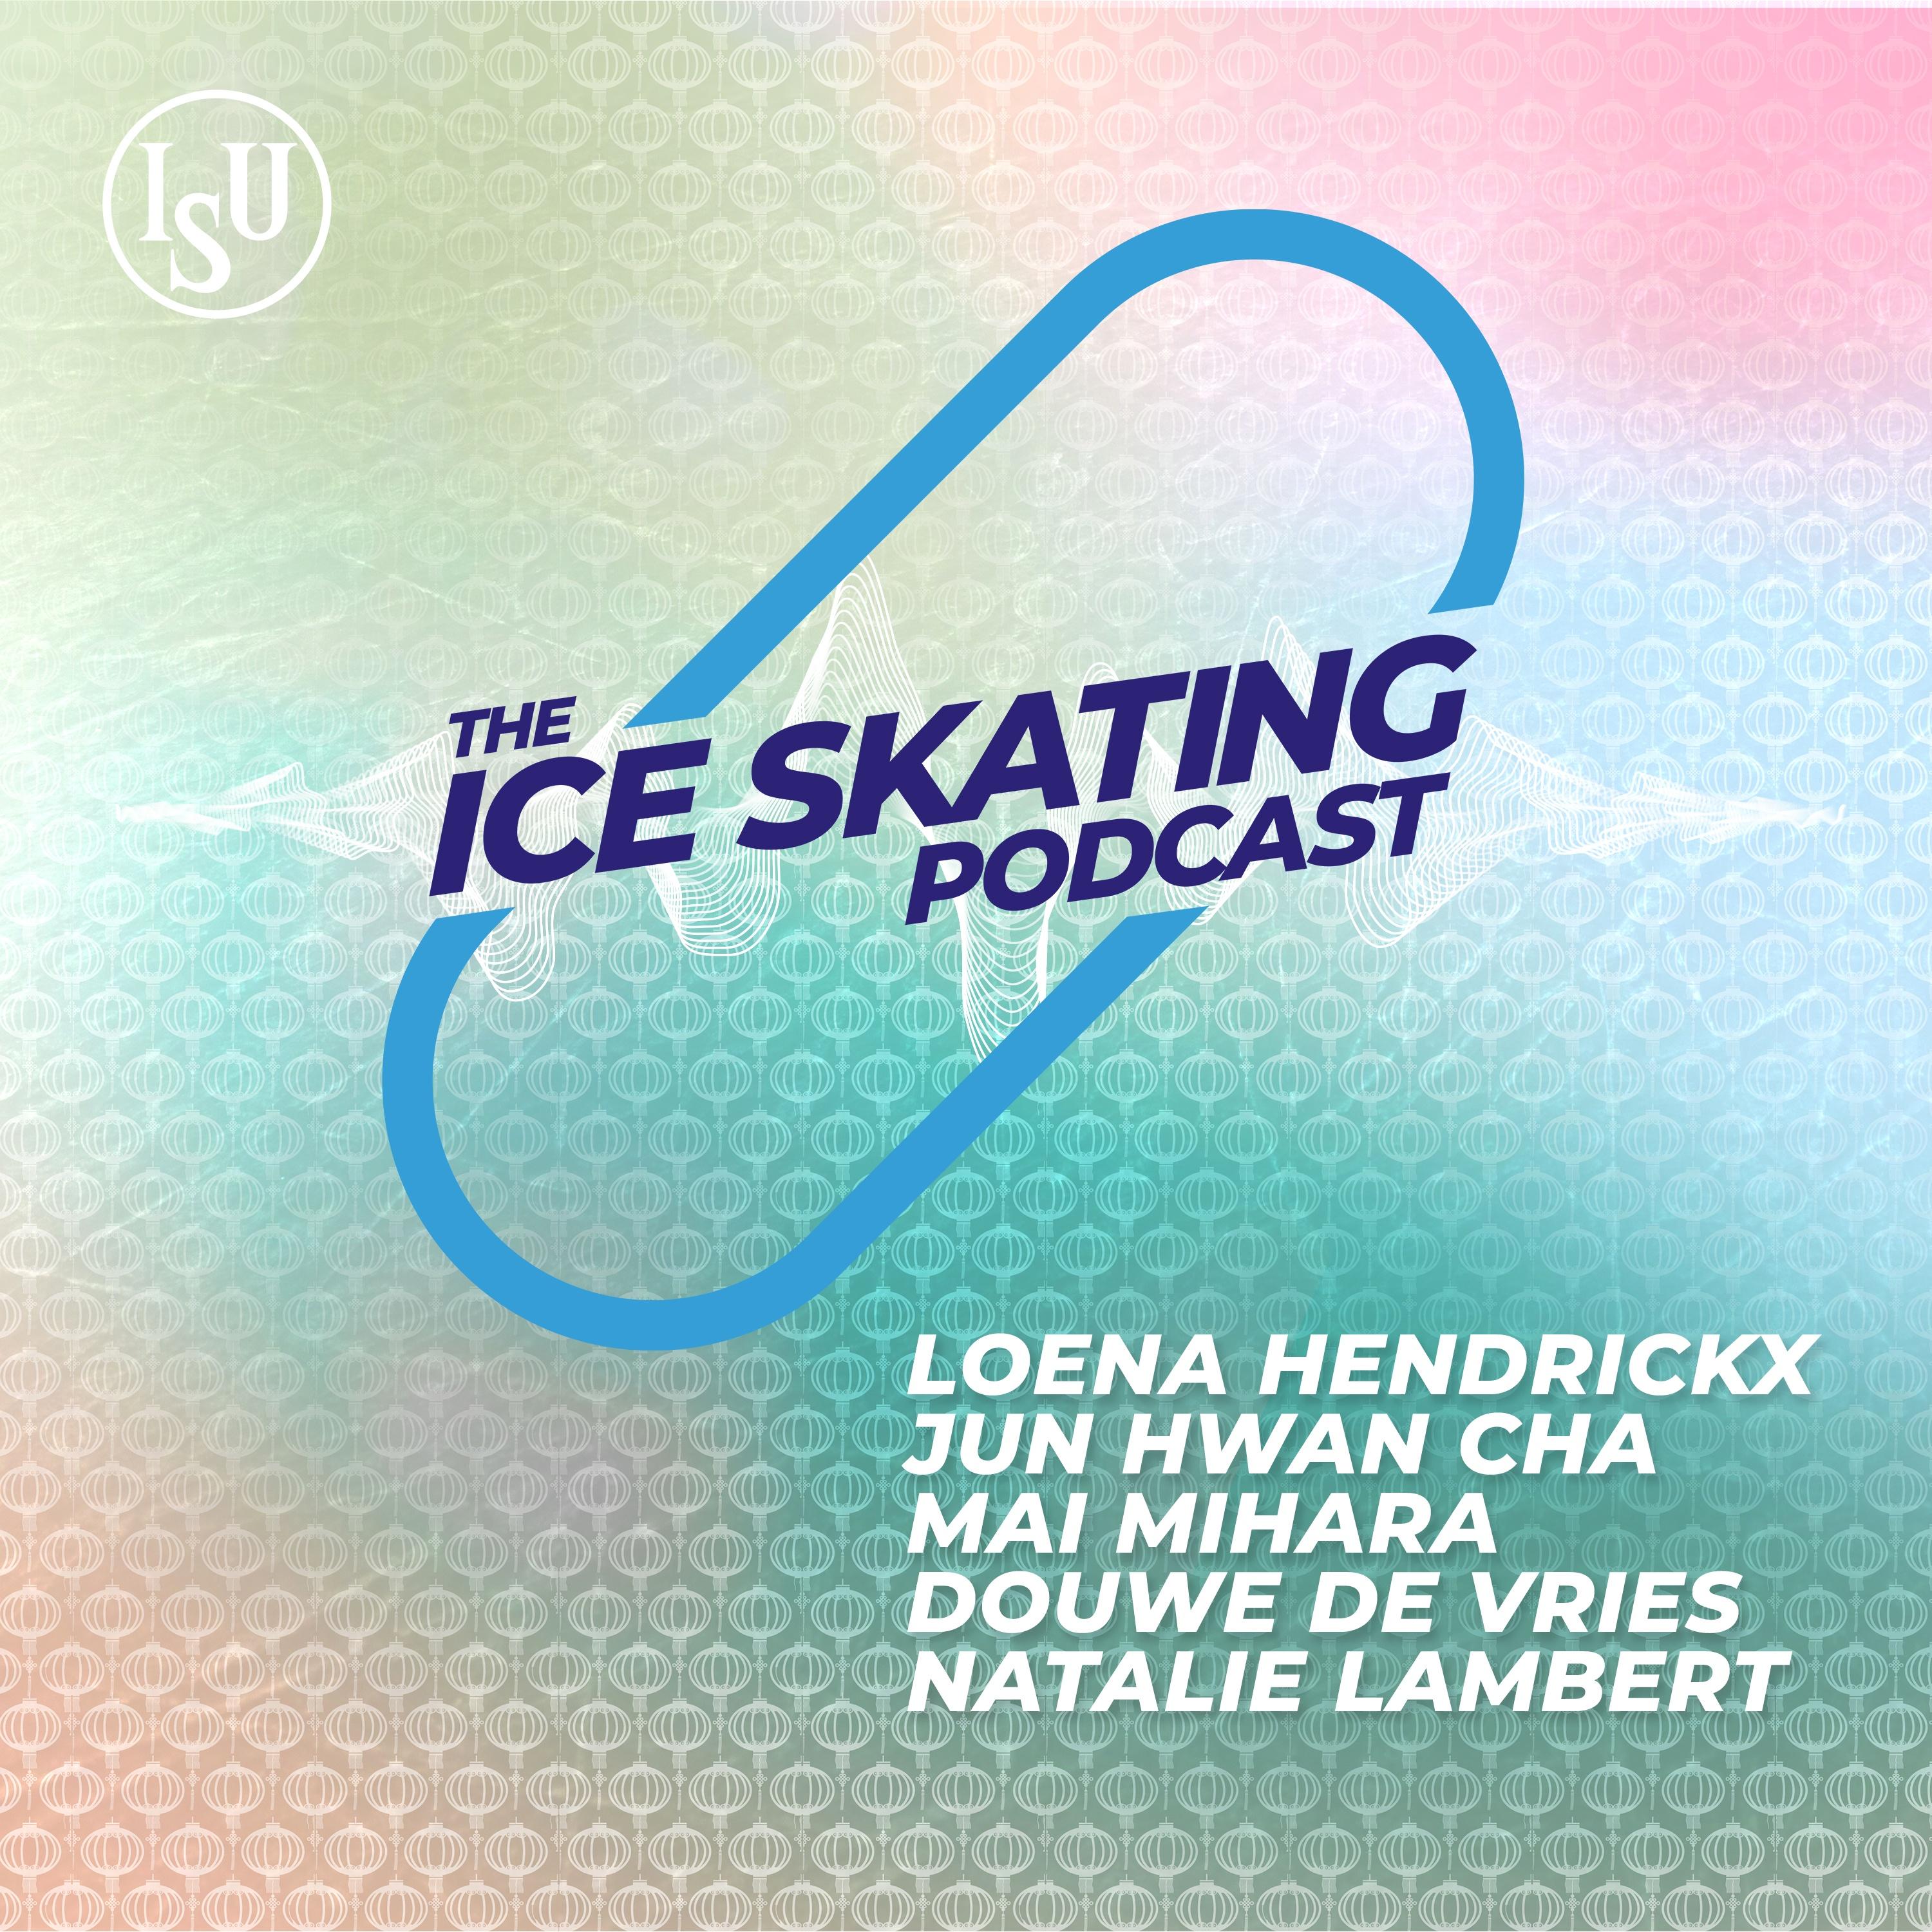 ISU Ice Skating Podcast Banners 360x240